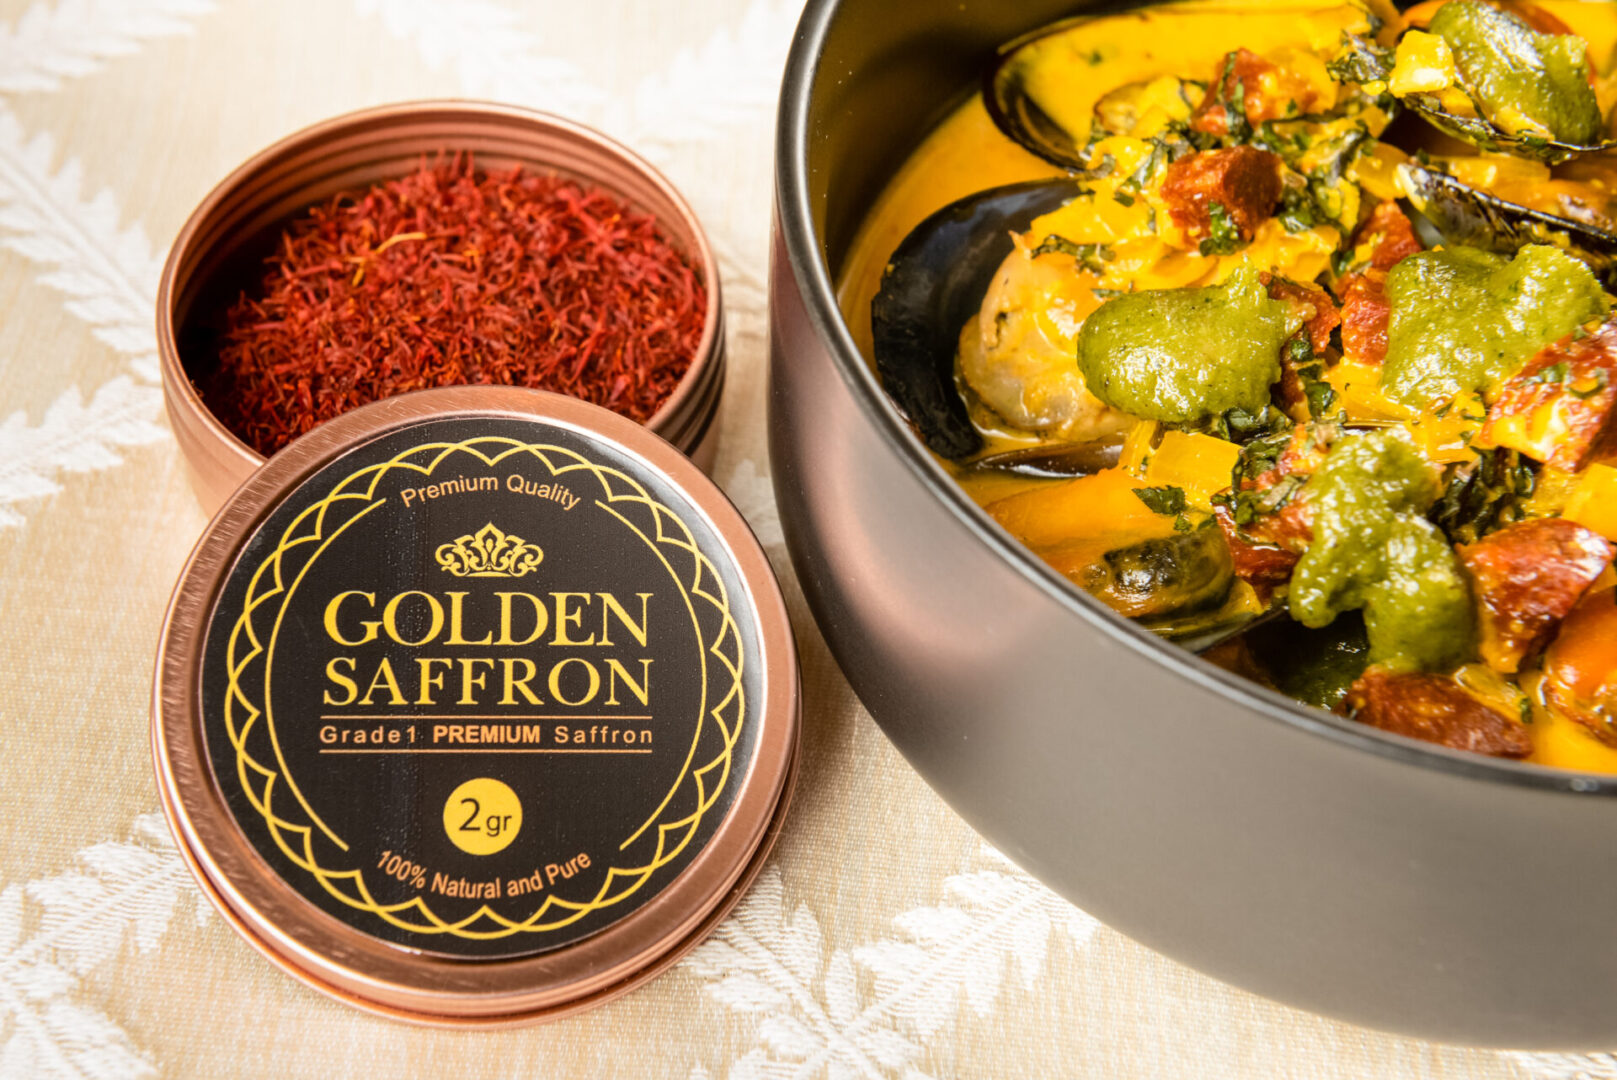 A premium golden saffron box is featured